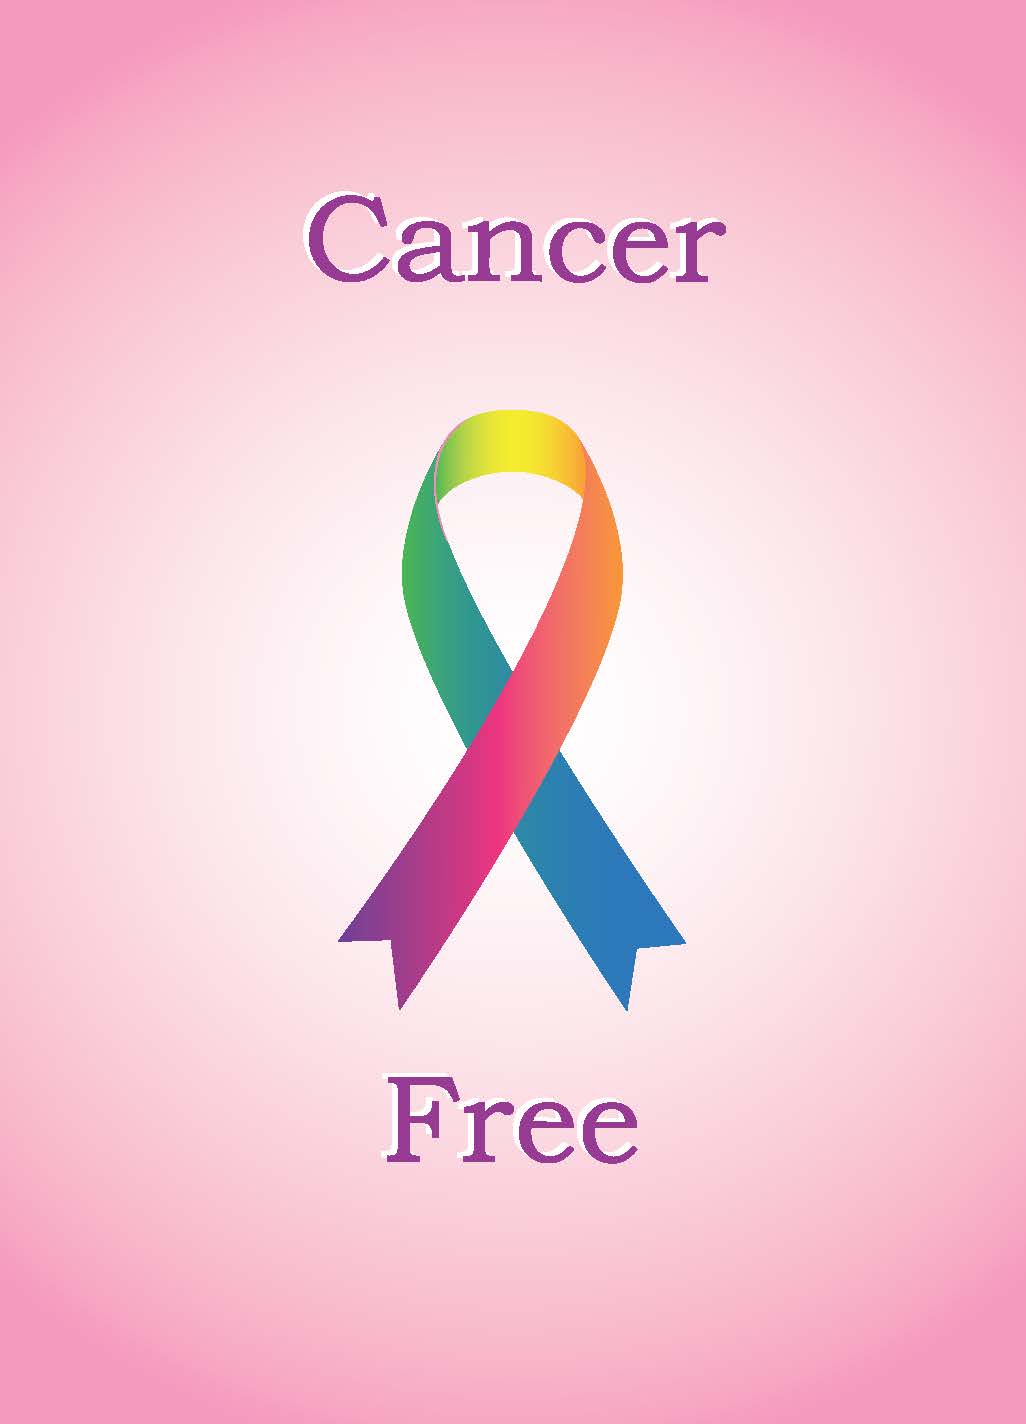 https://heavensentgreetingcards.com/wp-content/uploads/2020/06/Cancer-Free-Card-PRINT_Page_1.jpg